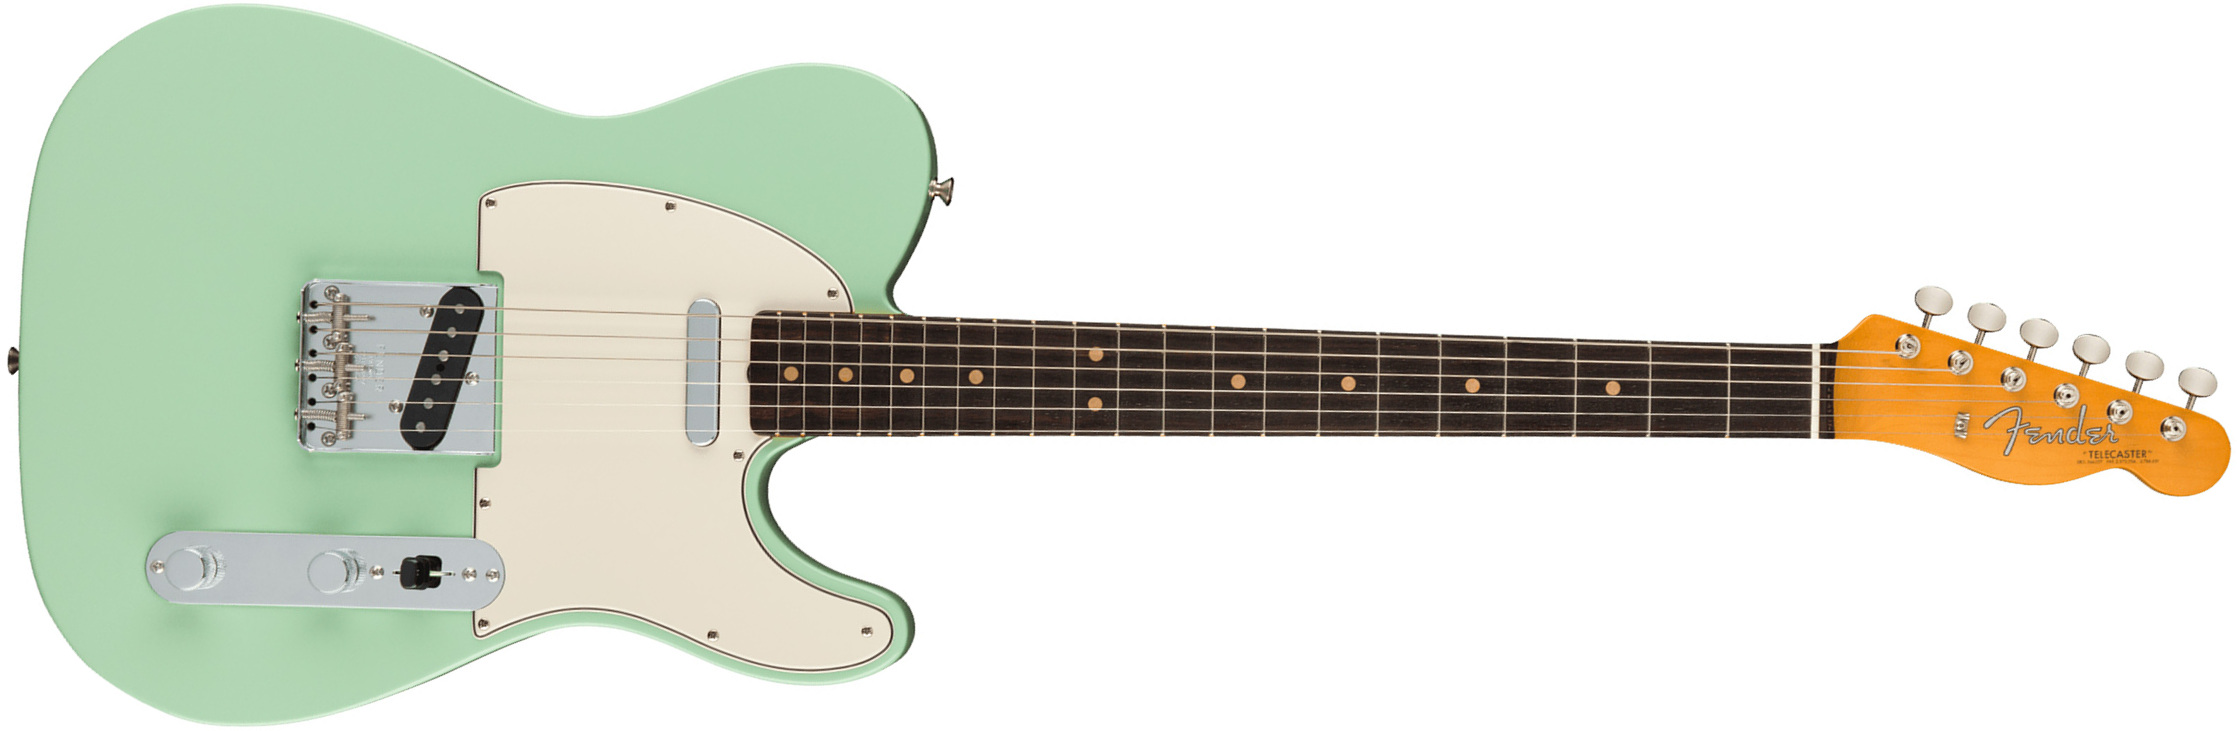 Fender Tele 1963 American Vintage Ii Usa 2s Ht Rw - Surf Green - Guitarra eléctrica con forma de tel - Main picture